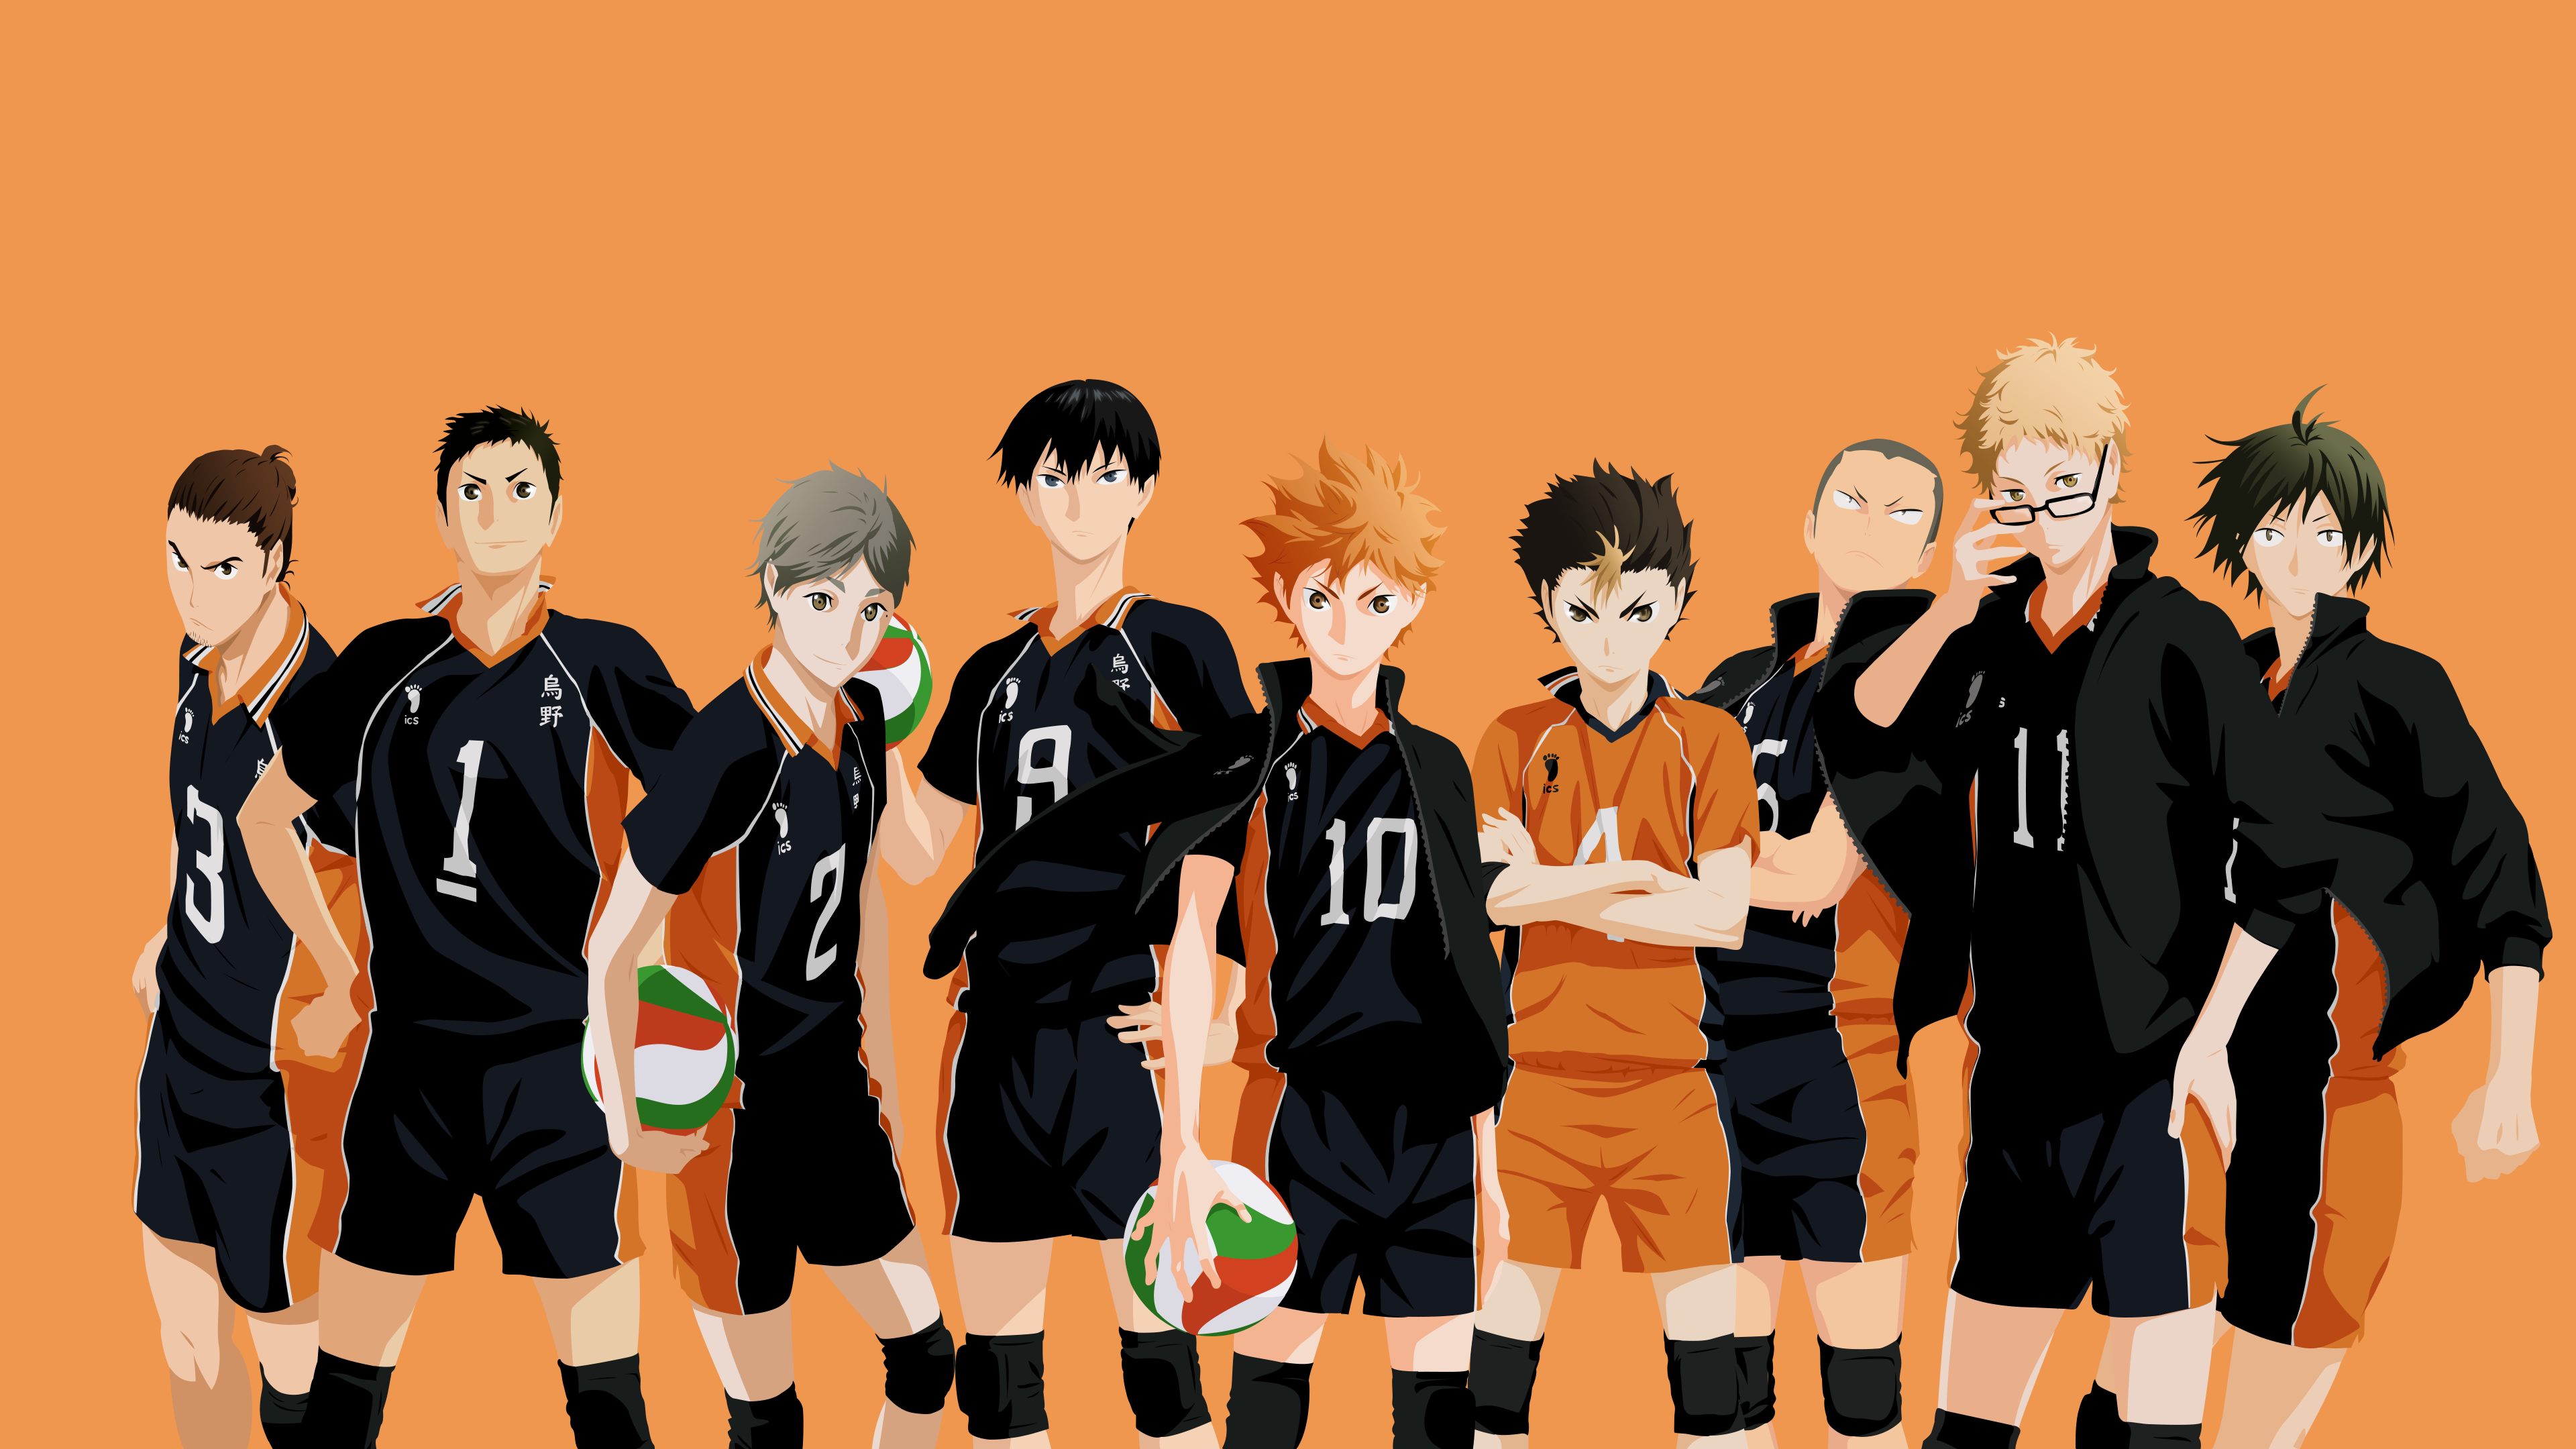 Karasuno Volleyball Team Desktop Wallpaper. Haikyuu wallpaper, HD anime wallpaper, Desktop wallpaper art